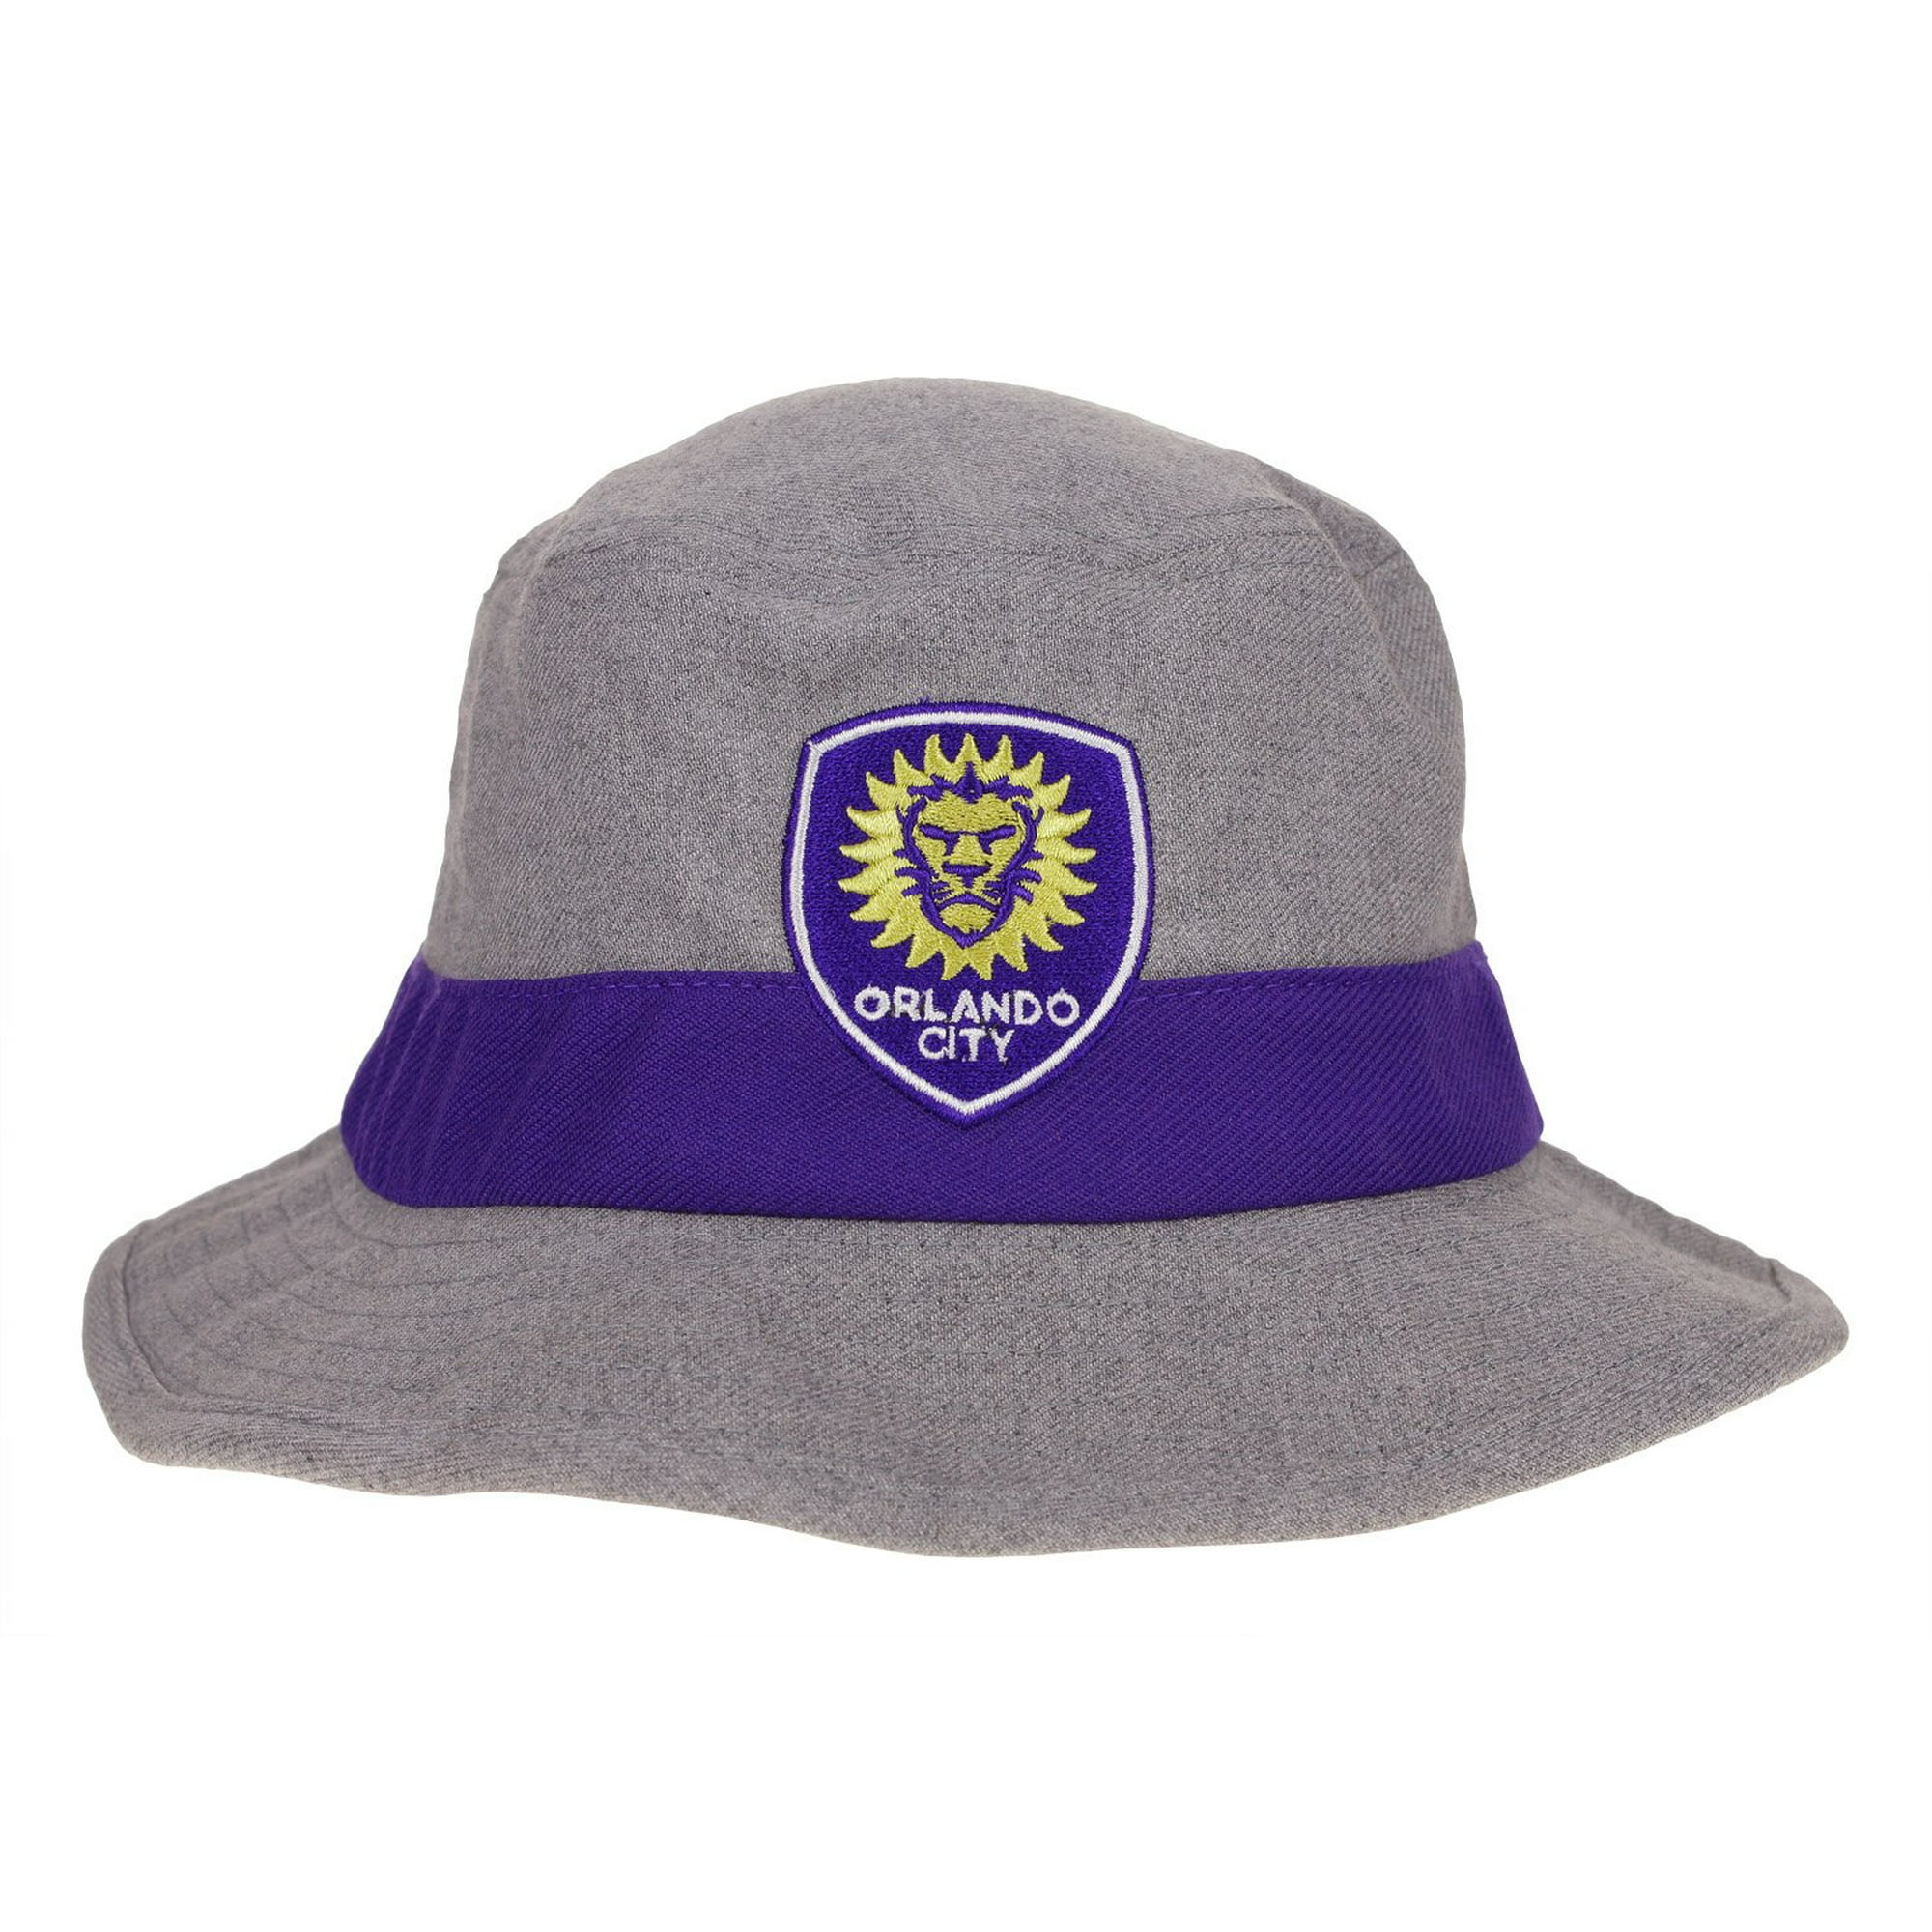 Adidas Orlando City S.C Lions Men's Hat, One Size Grey - Walmart.com